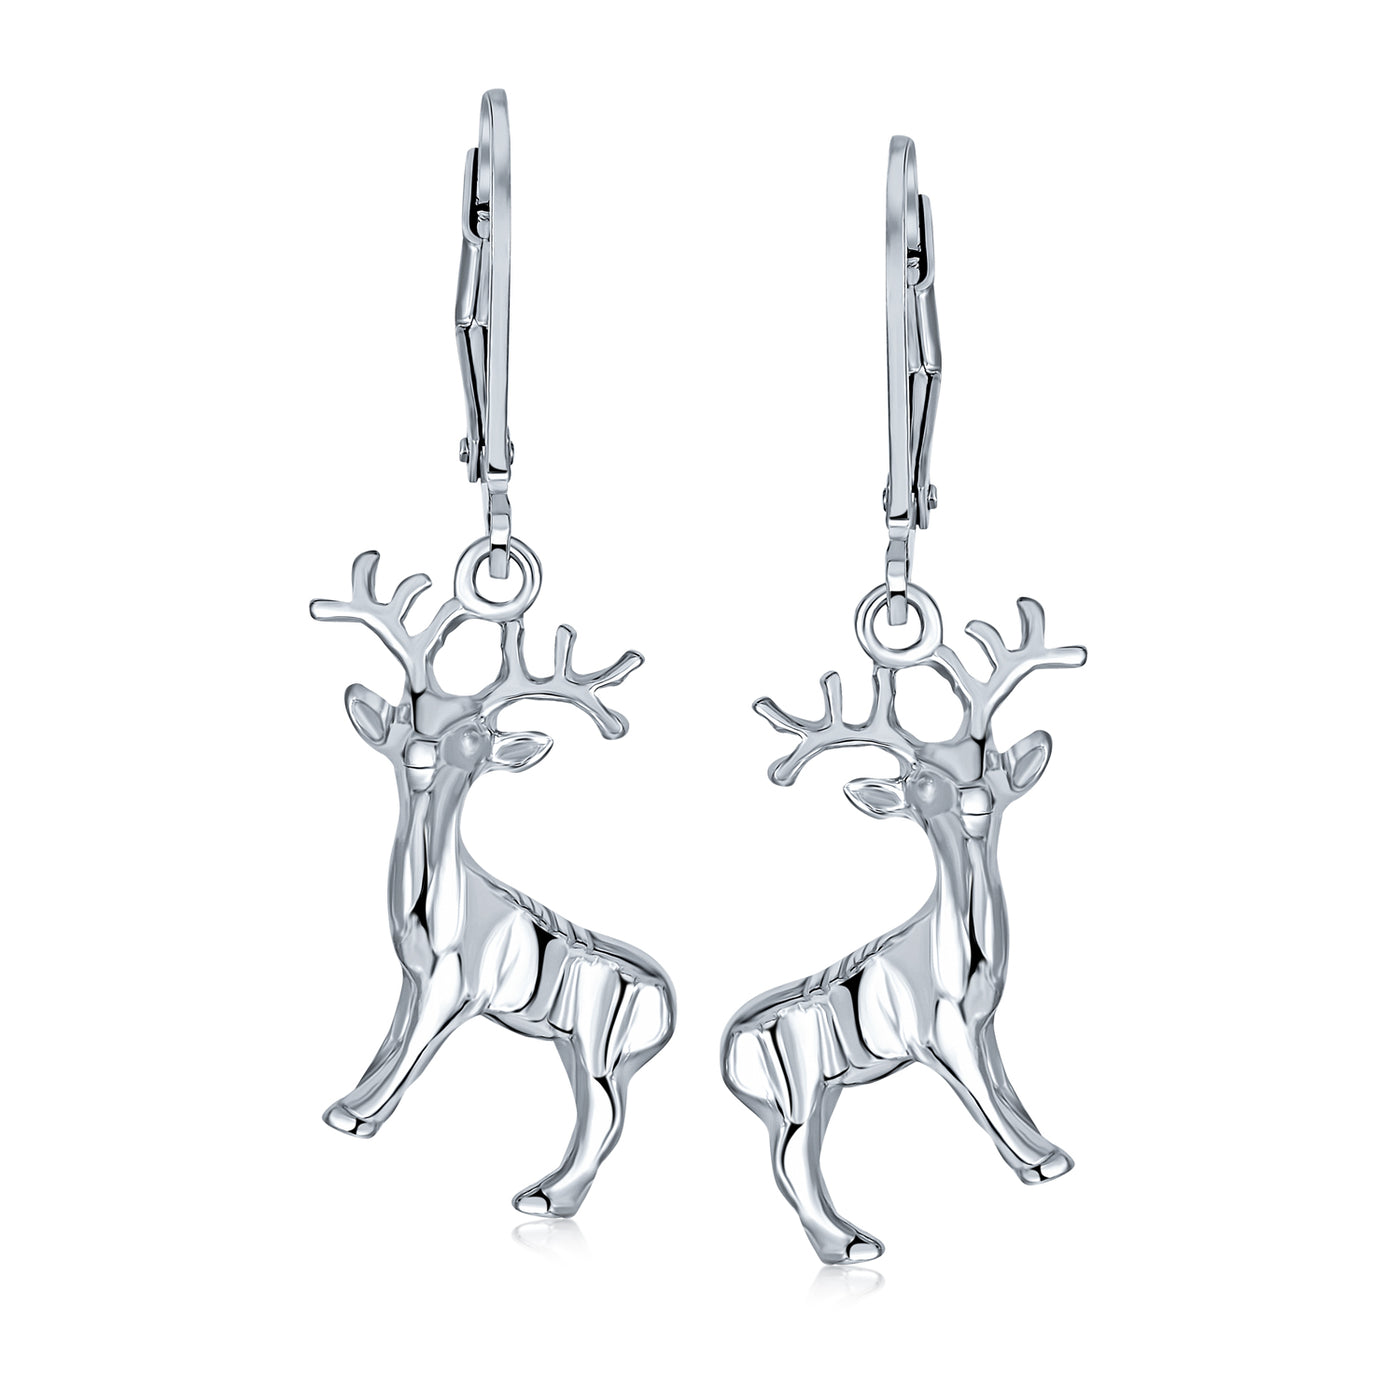 Christmas Rudolph Reindeer Lever back Dangle Earrings Sterling Silver